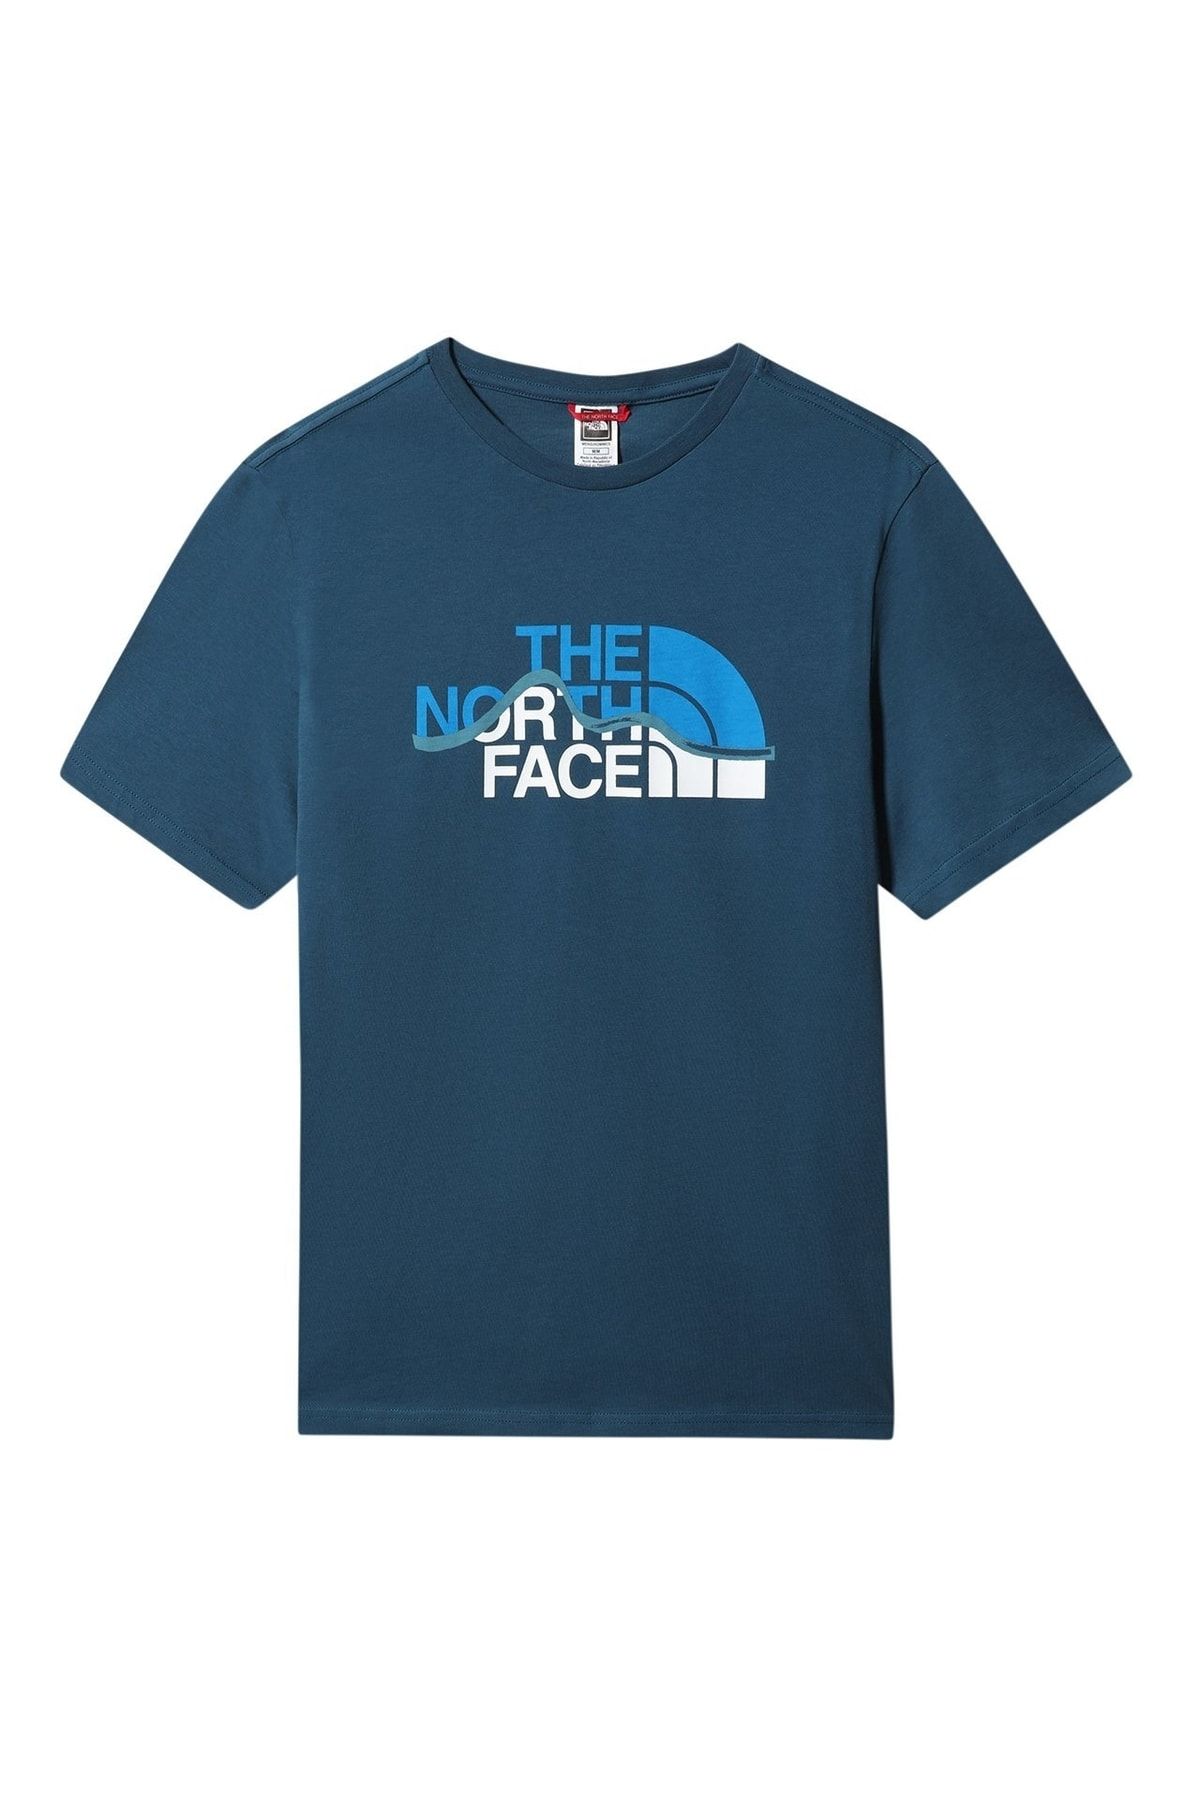 The North Face Erkek S/s Mountain Line Tee - Eu Tişört Mavi